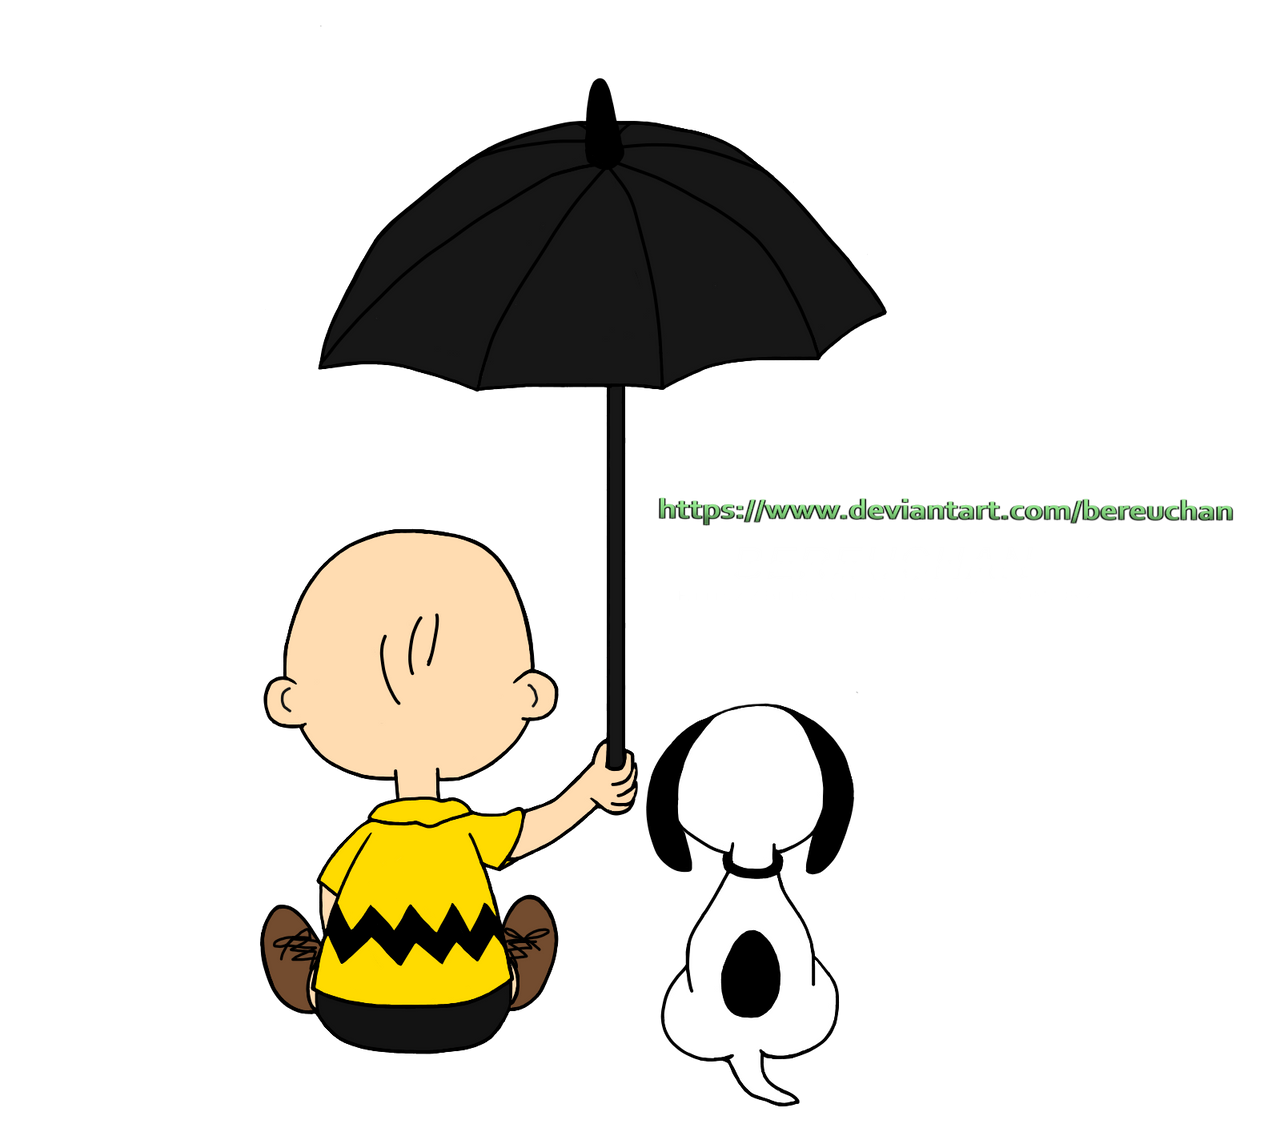 Charlie Brown e Snoopy - render 2 by BereuChan on DeviantArt